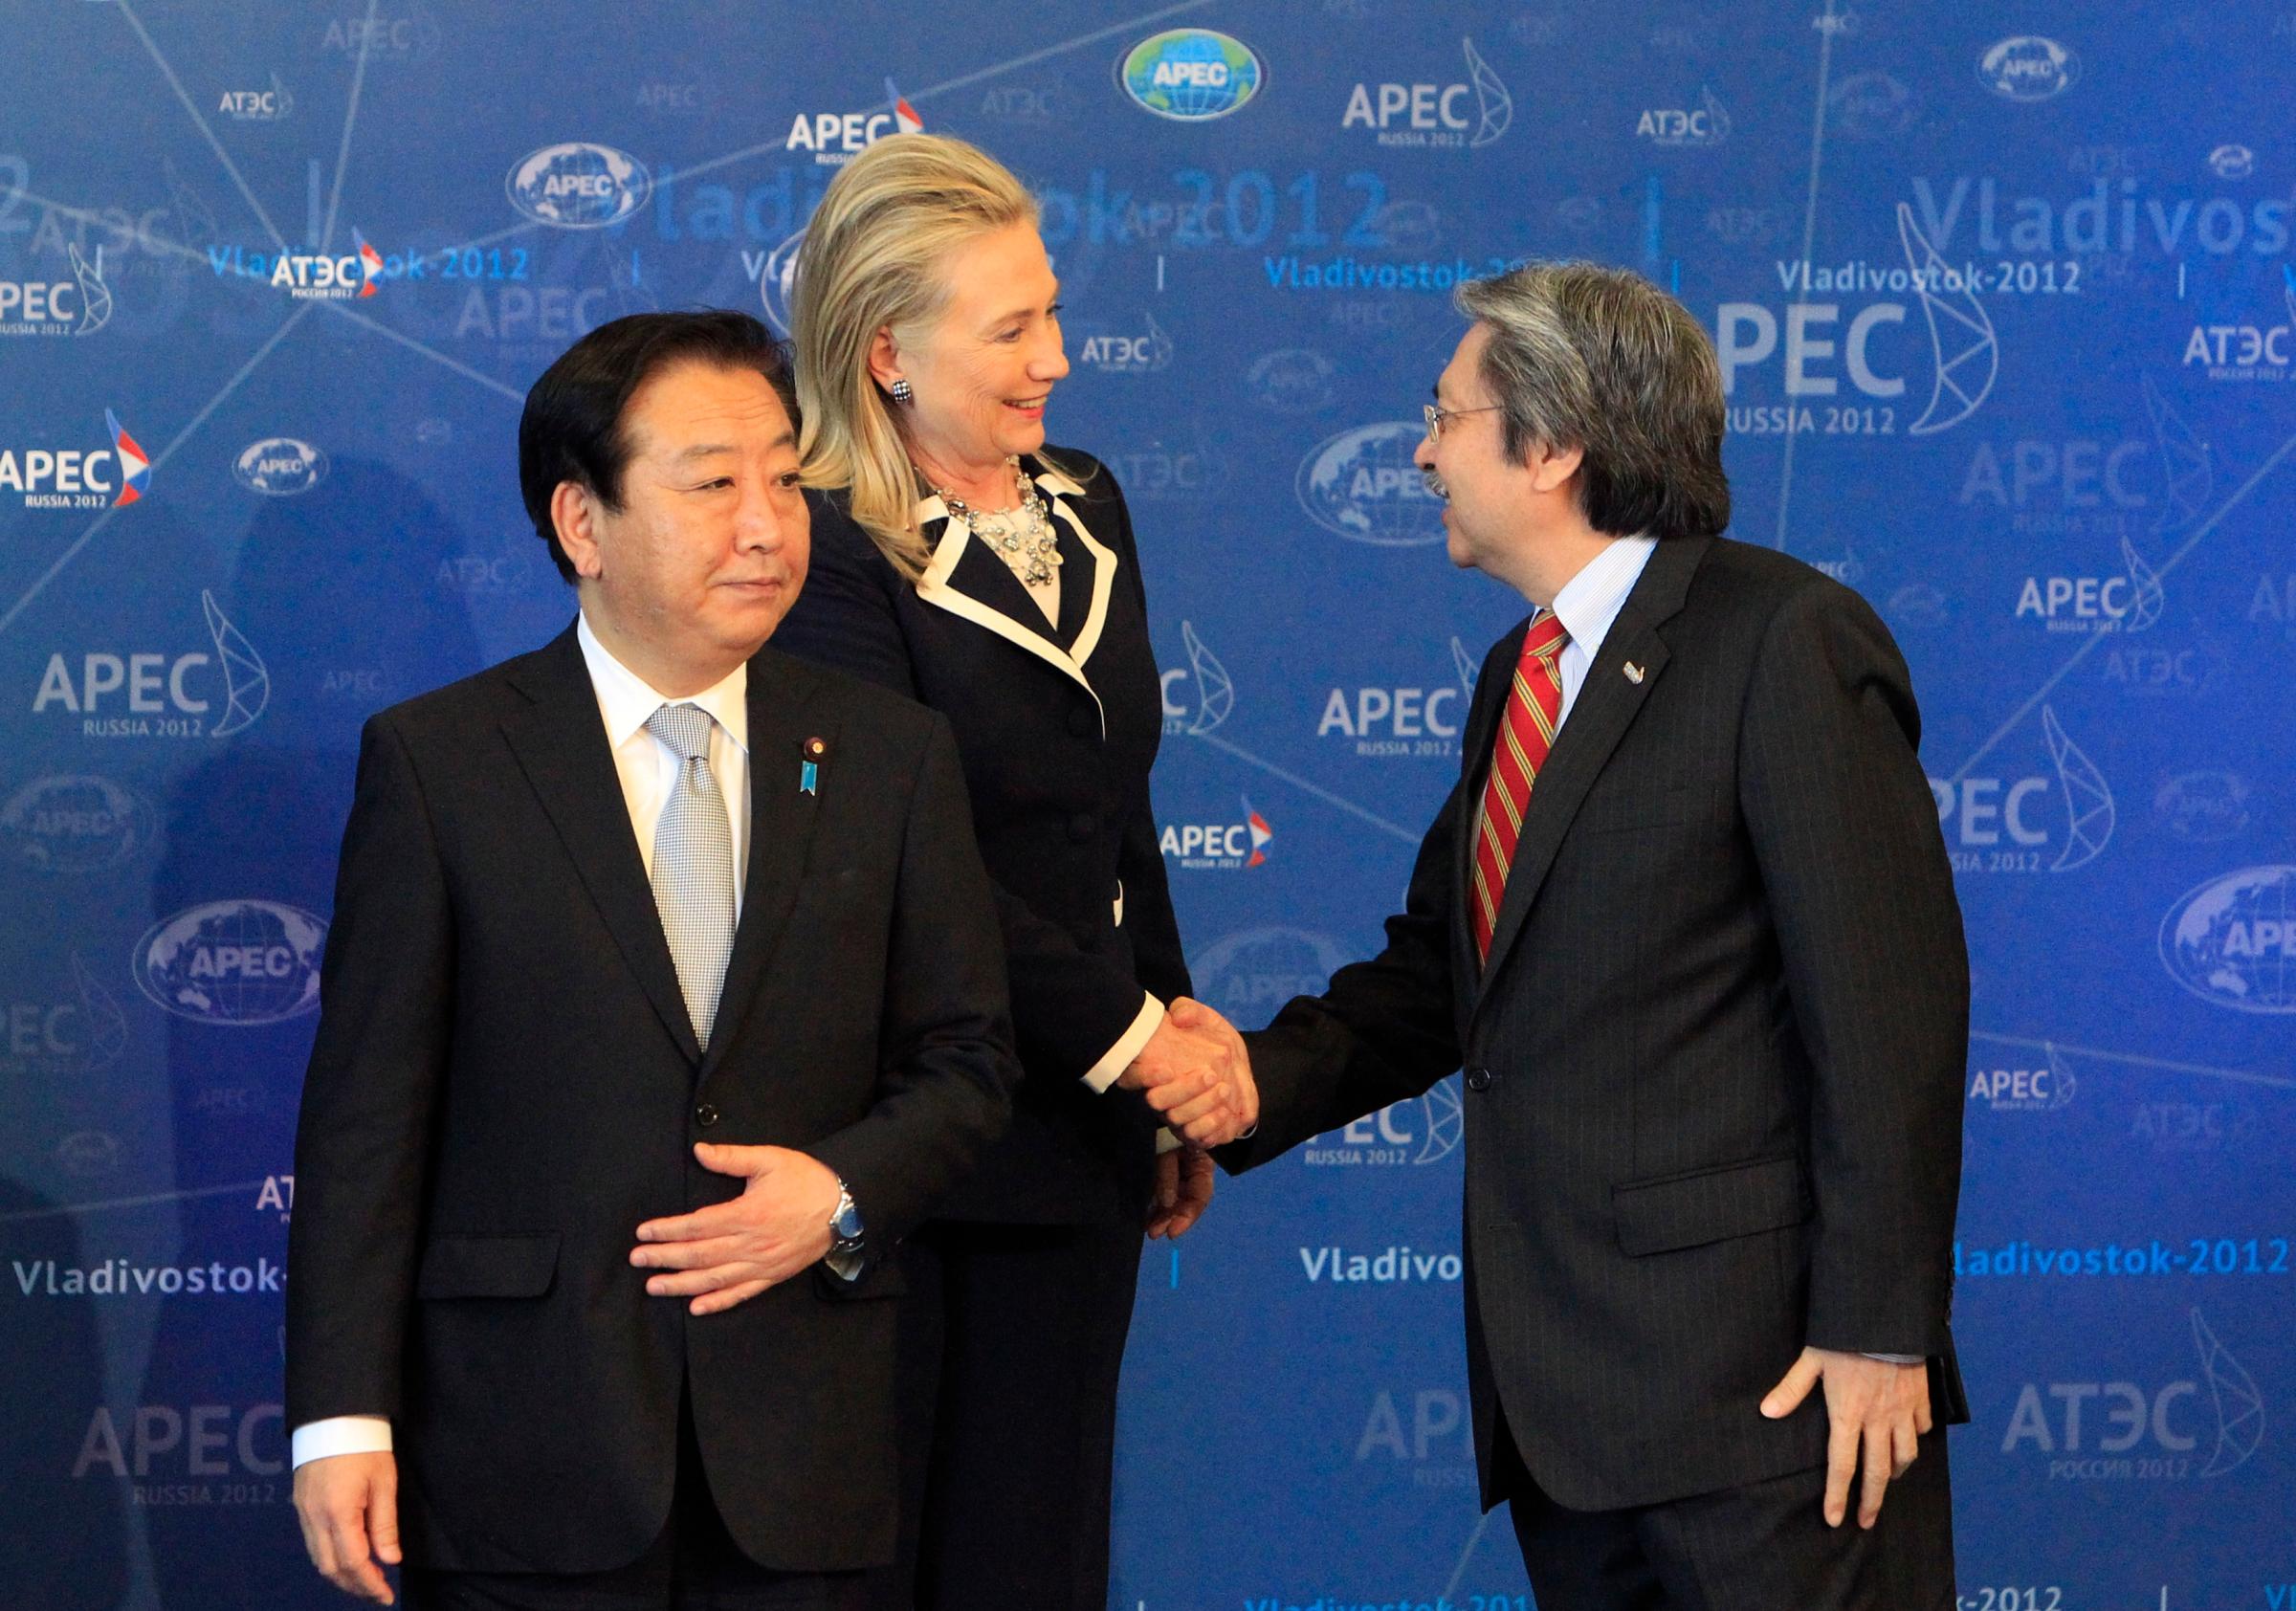 U.S. Secretary of State Hillary Clinton shakes hands with Hong Kong's Financial Secretary John Tsang during a group photo in Vladivostok